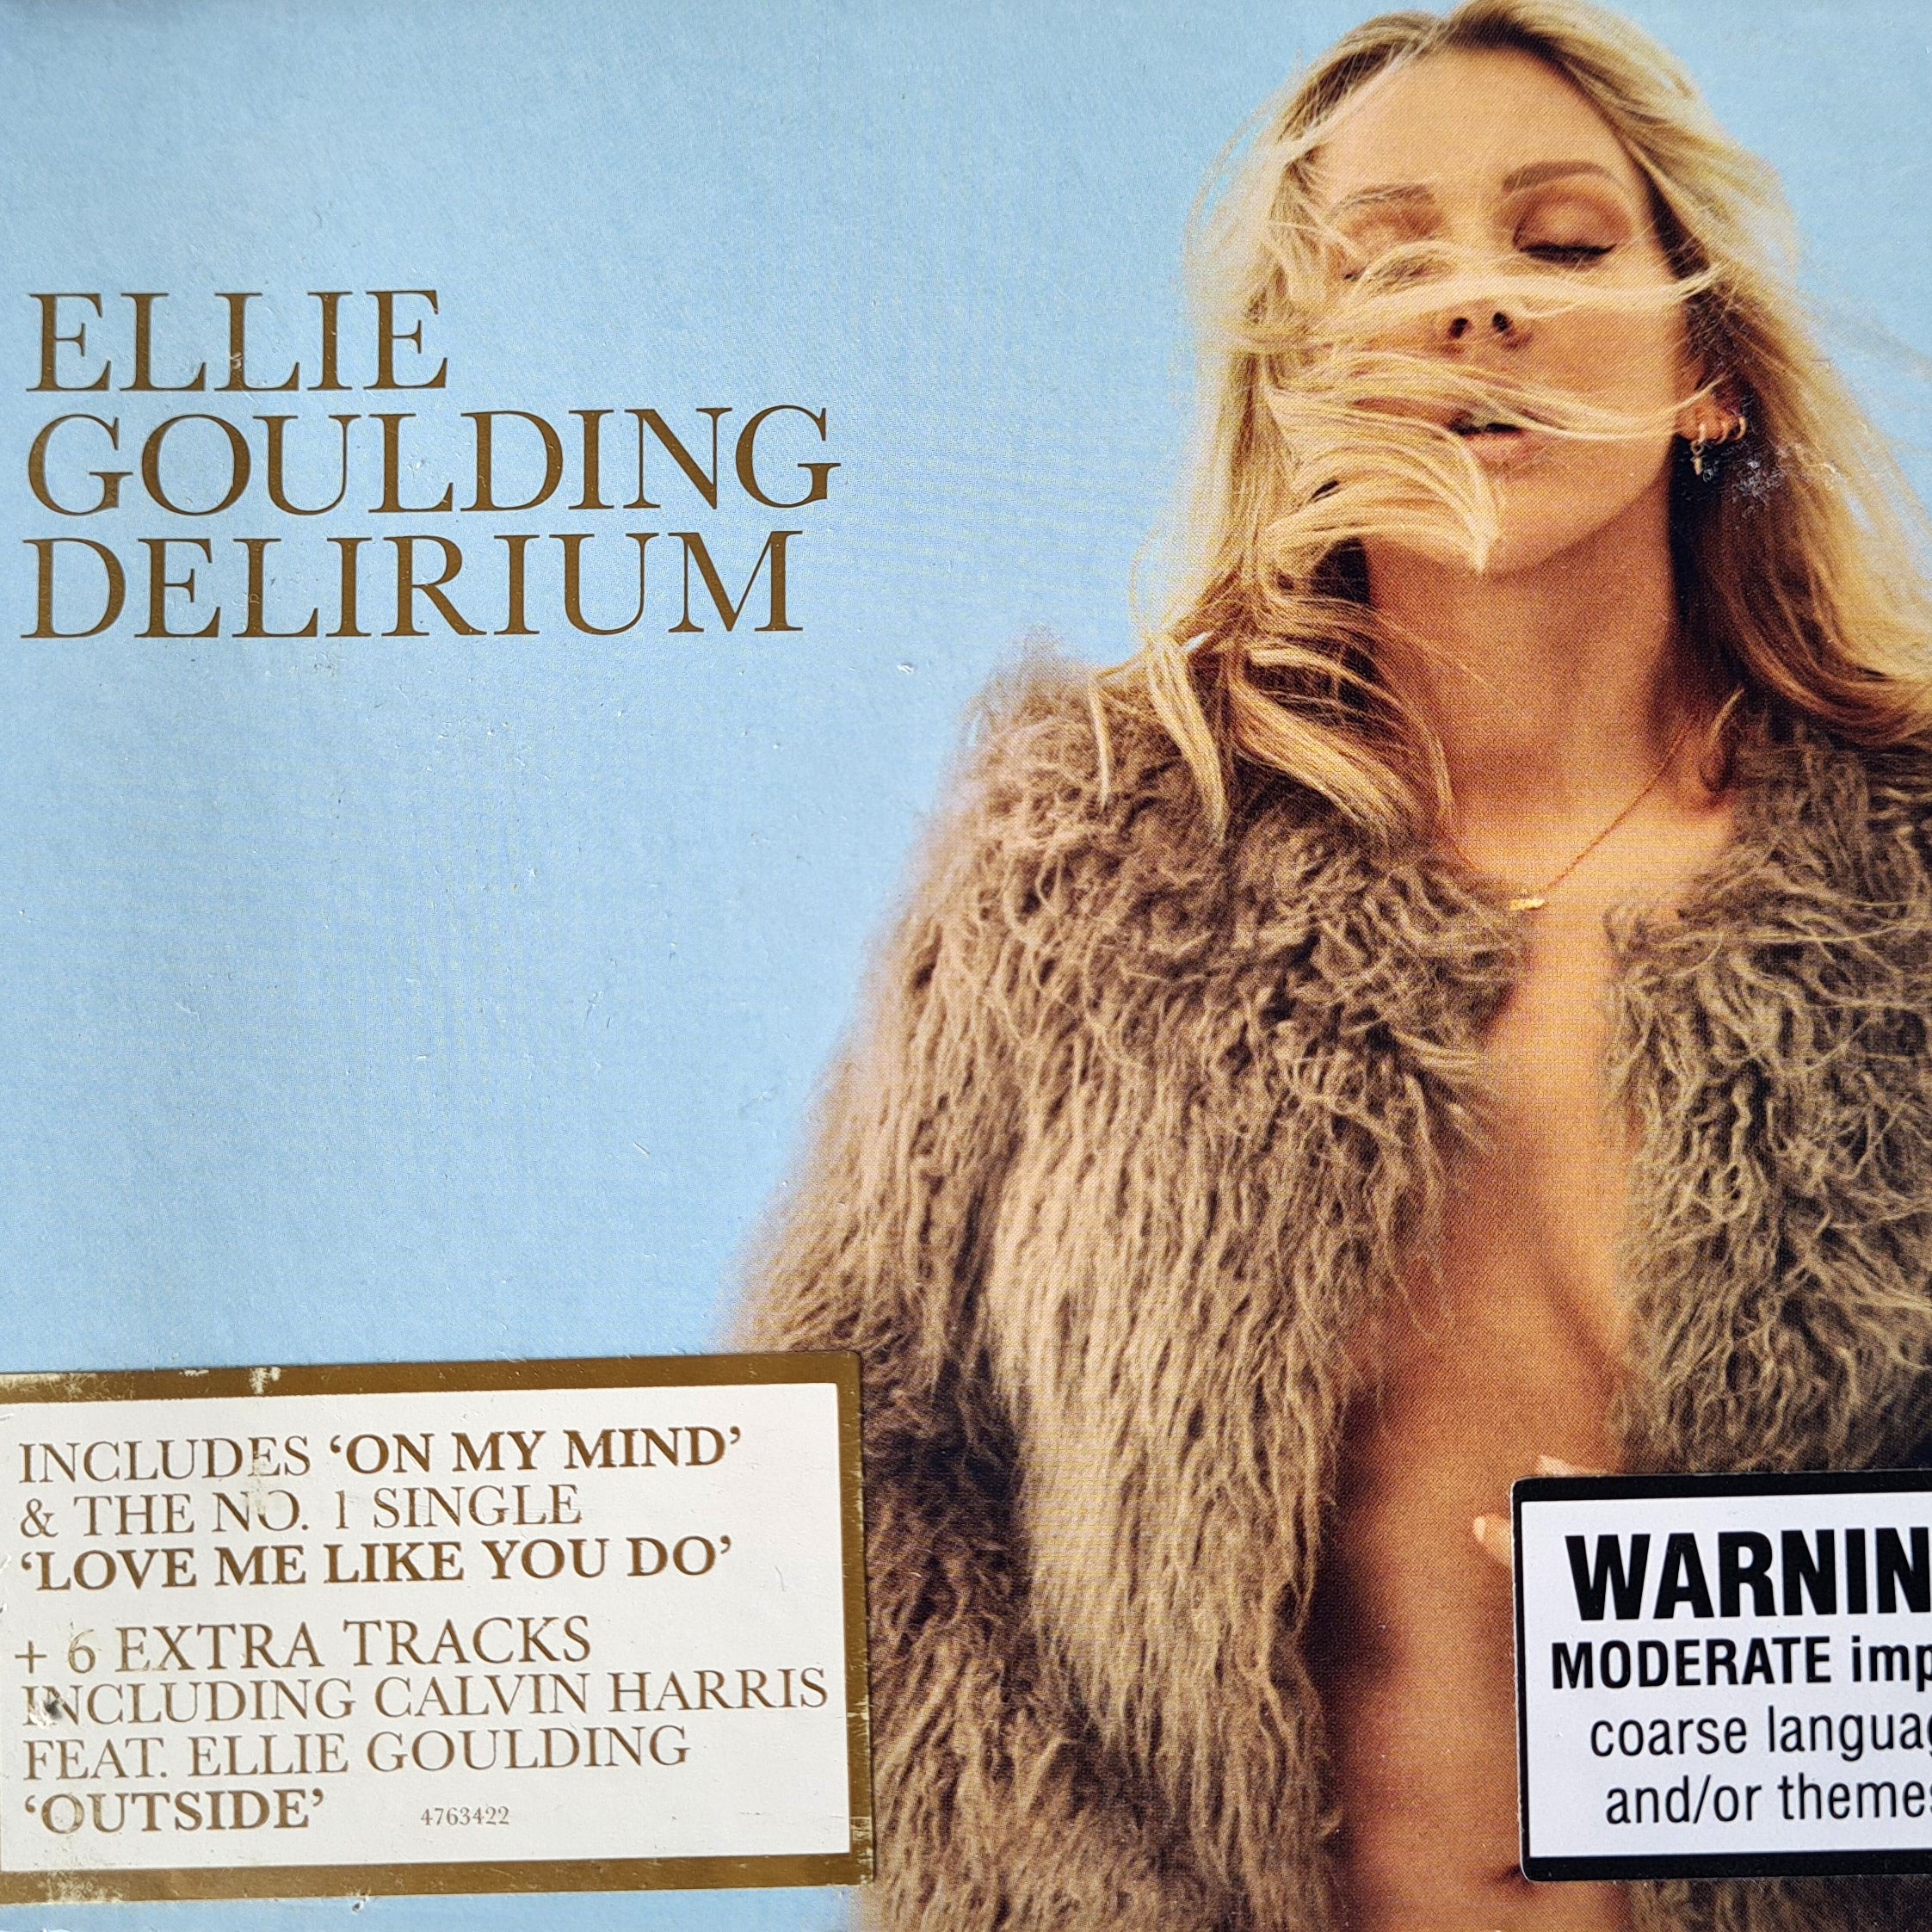 Ellie Goulding - Delerium - Deluxe Edition (CD)